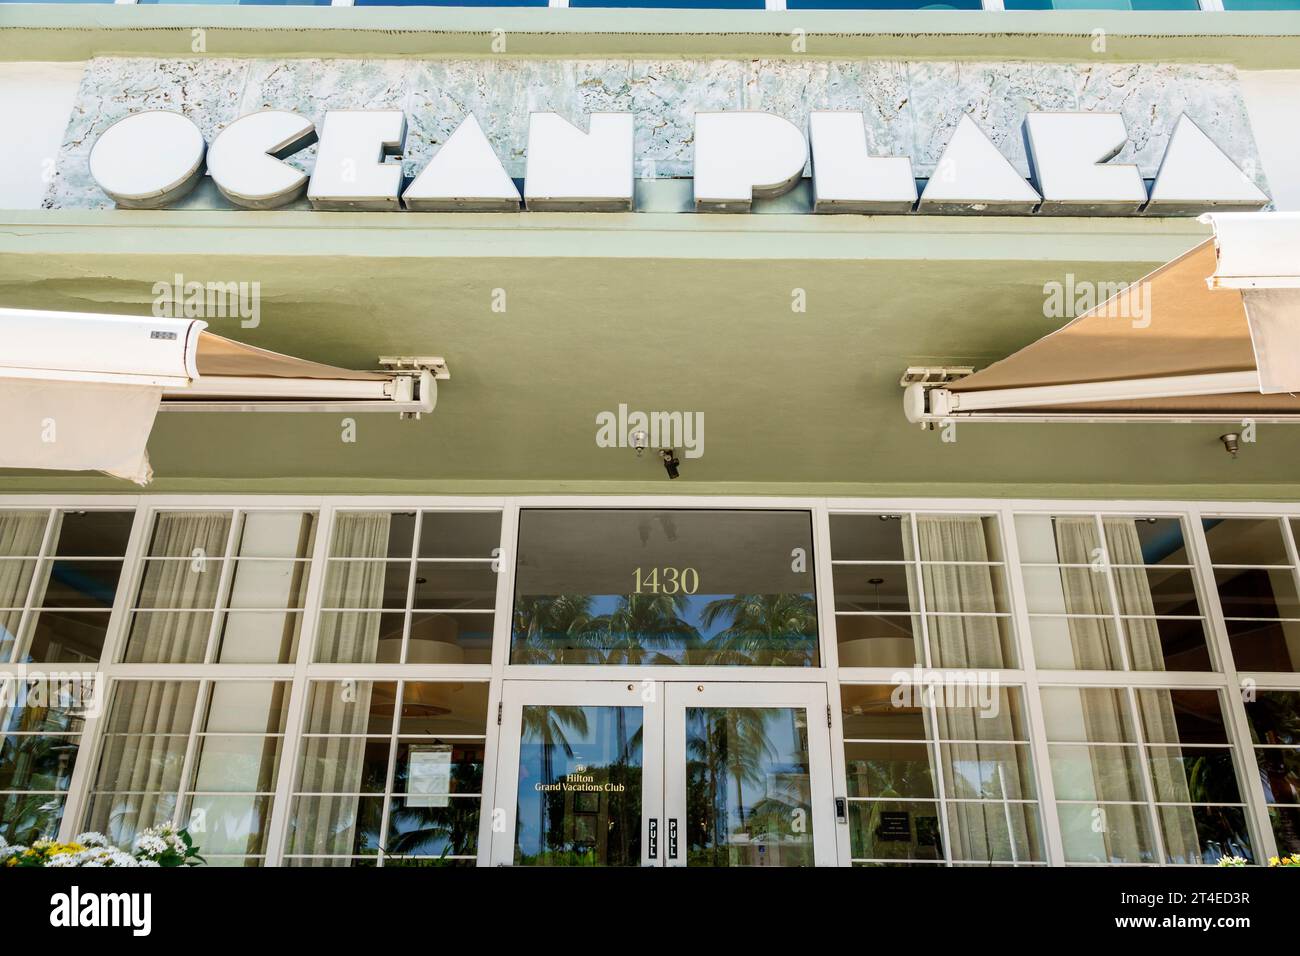 Miami Beach Florida, Außenfassade, Gebäude Vordereingang Hotel, Ocean Drive Hilton Grand Vacations Club McAlpin Ocean Plaza Miami Schild, Hotels Motel Stockfoto